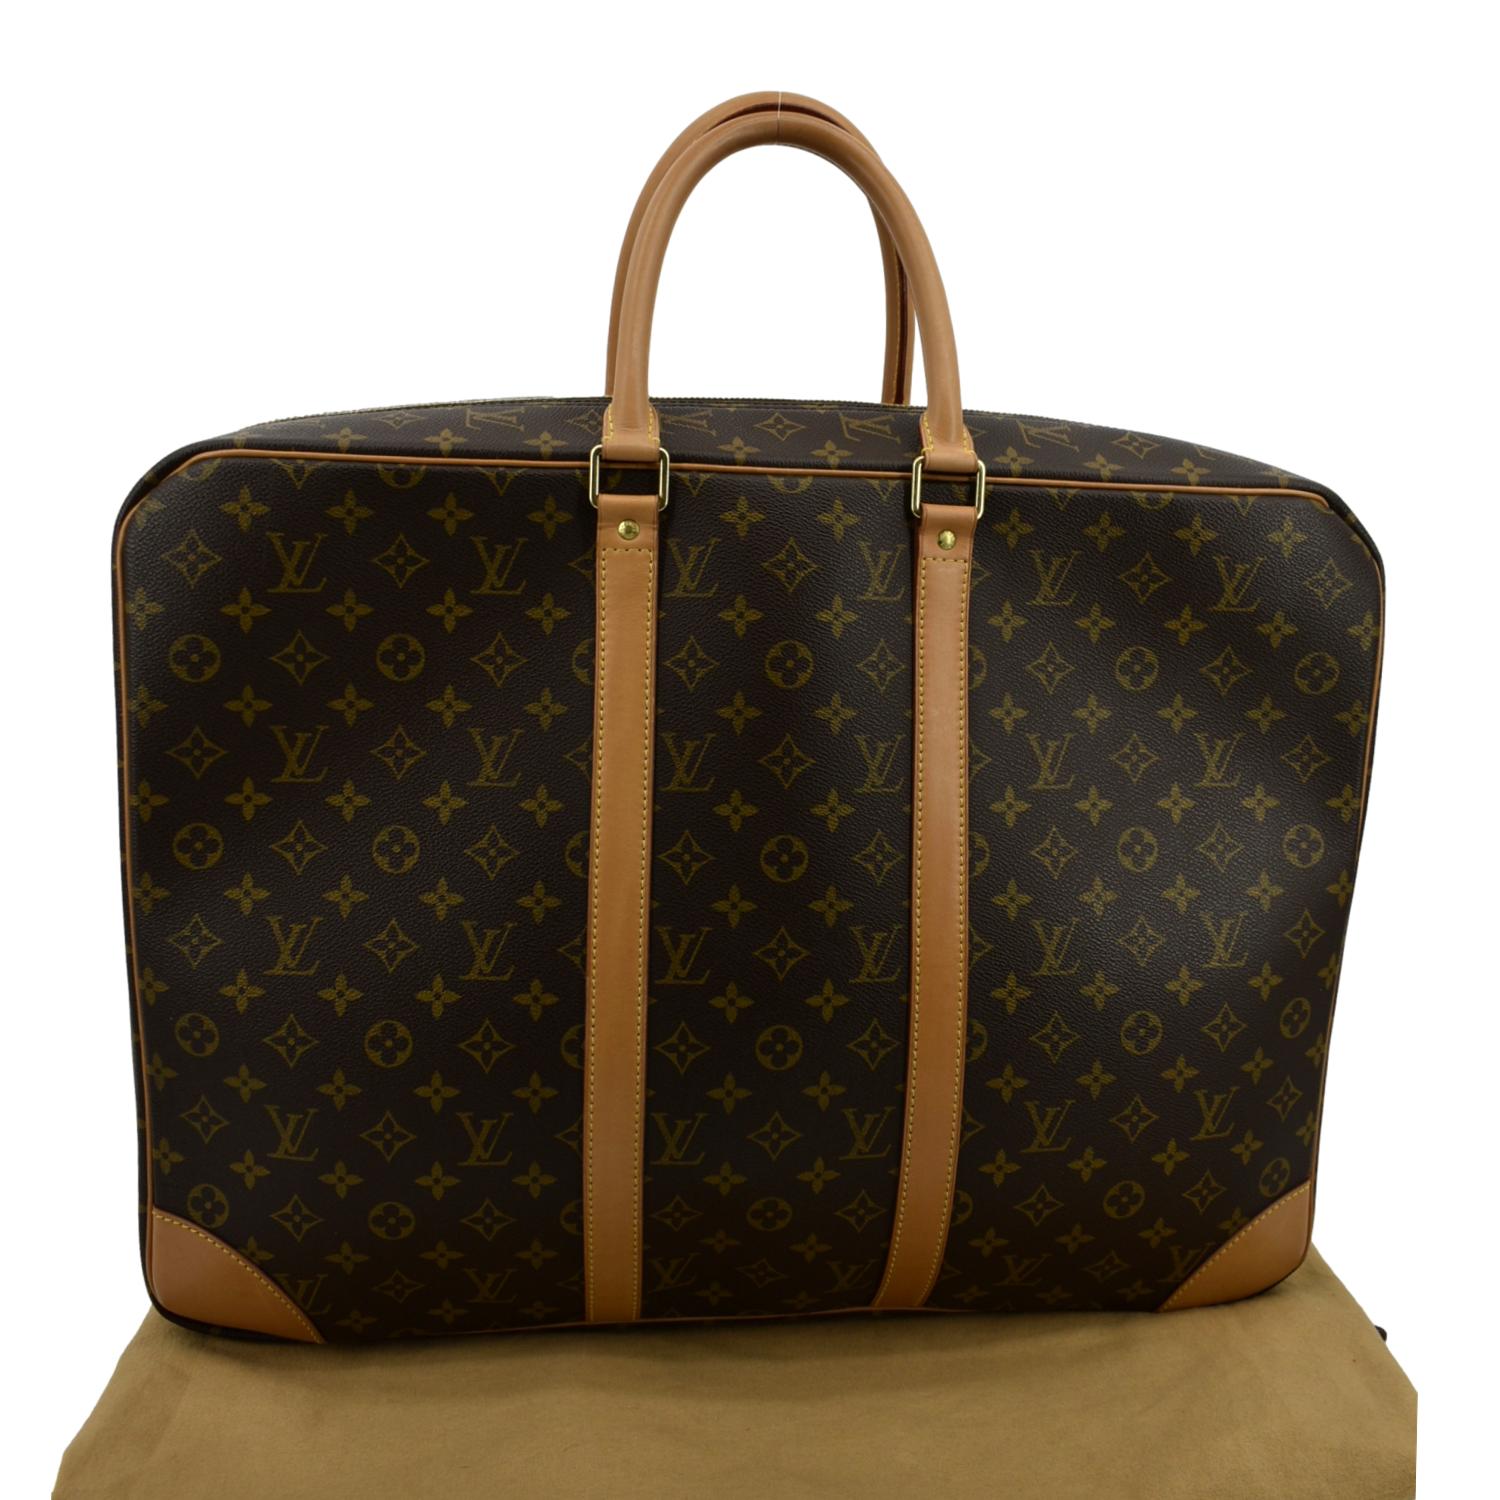 Preloved Louis Vuitton SIRIUS 45 Monogram Travel Bag SP1001 080923 $300 OFF